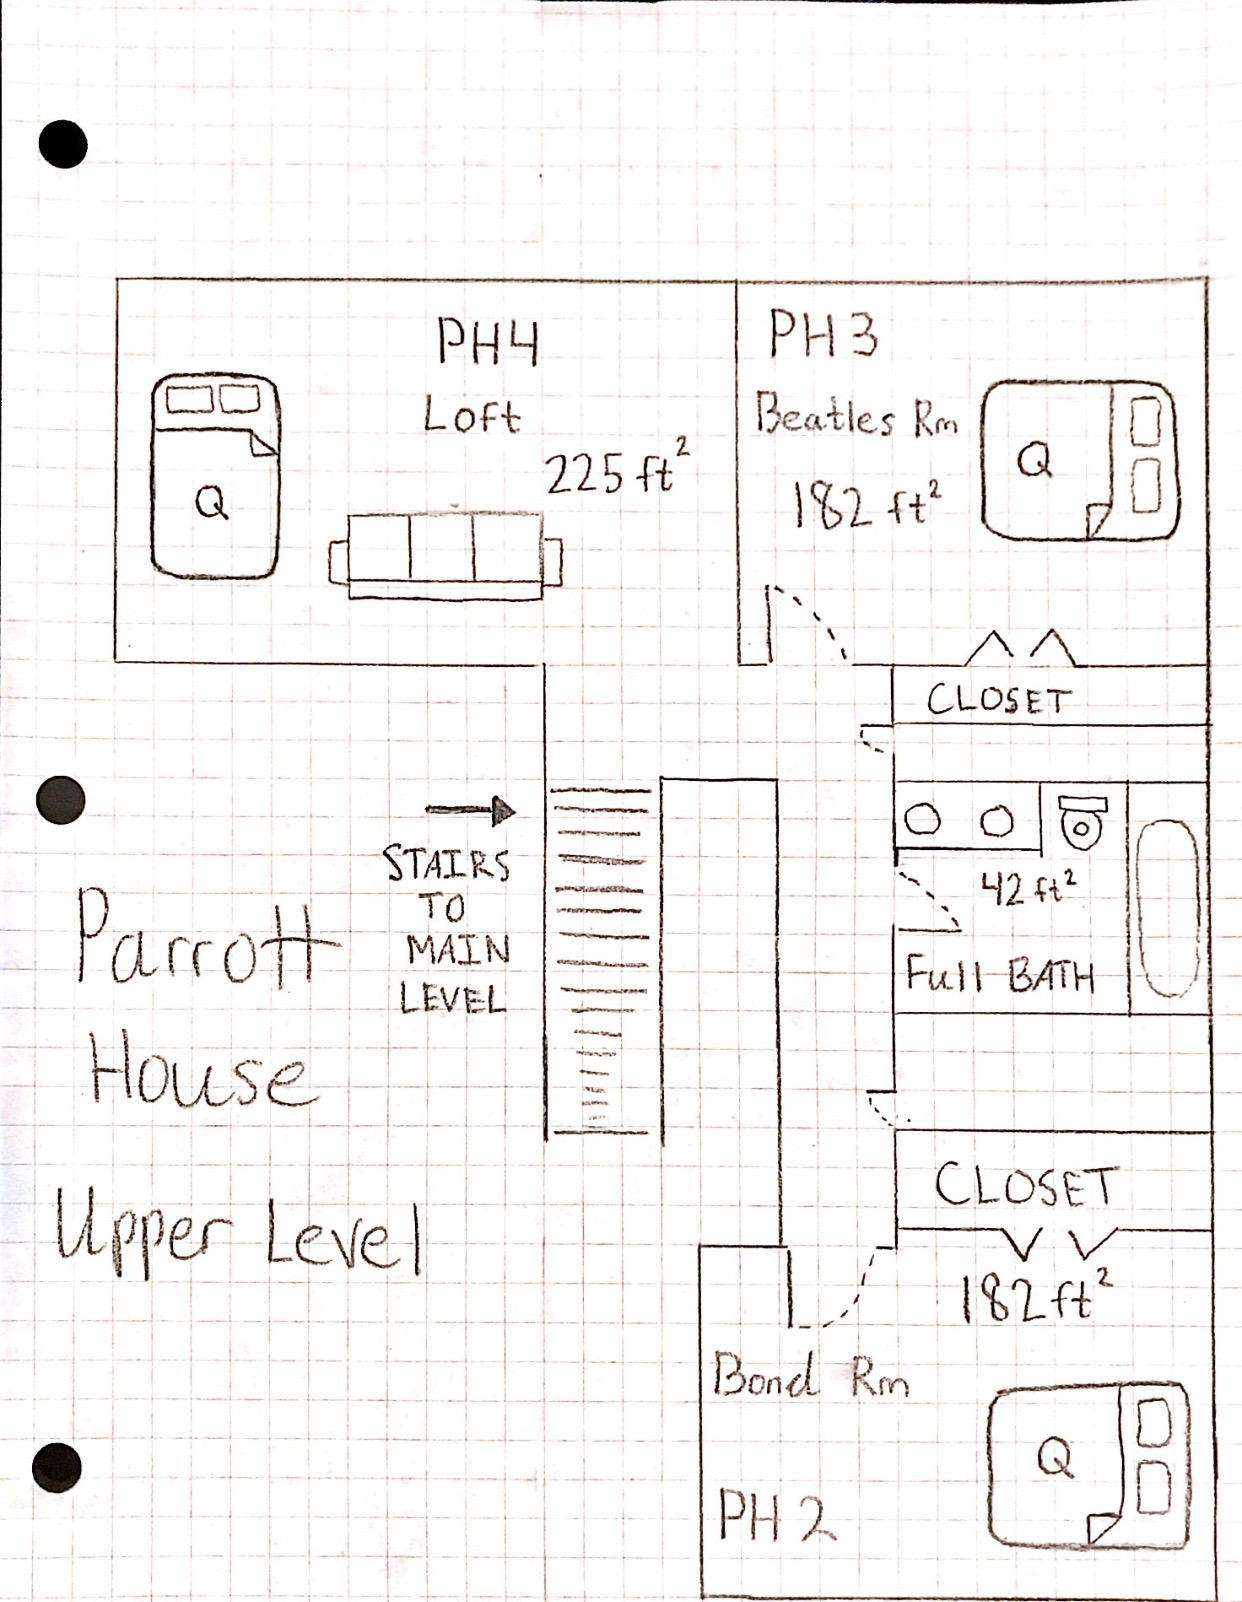 Parrot 2ND Floorplans (2).JPG